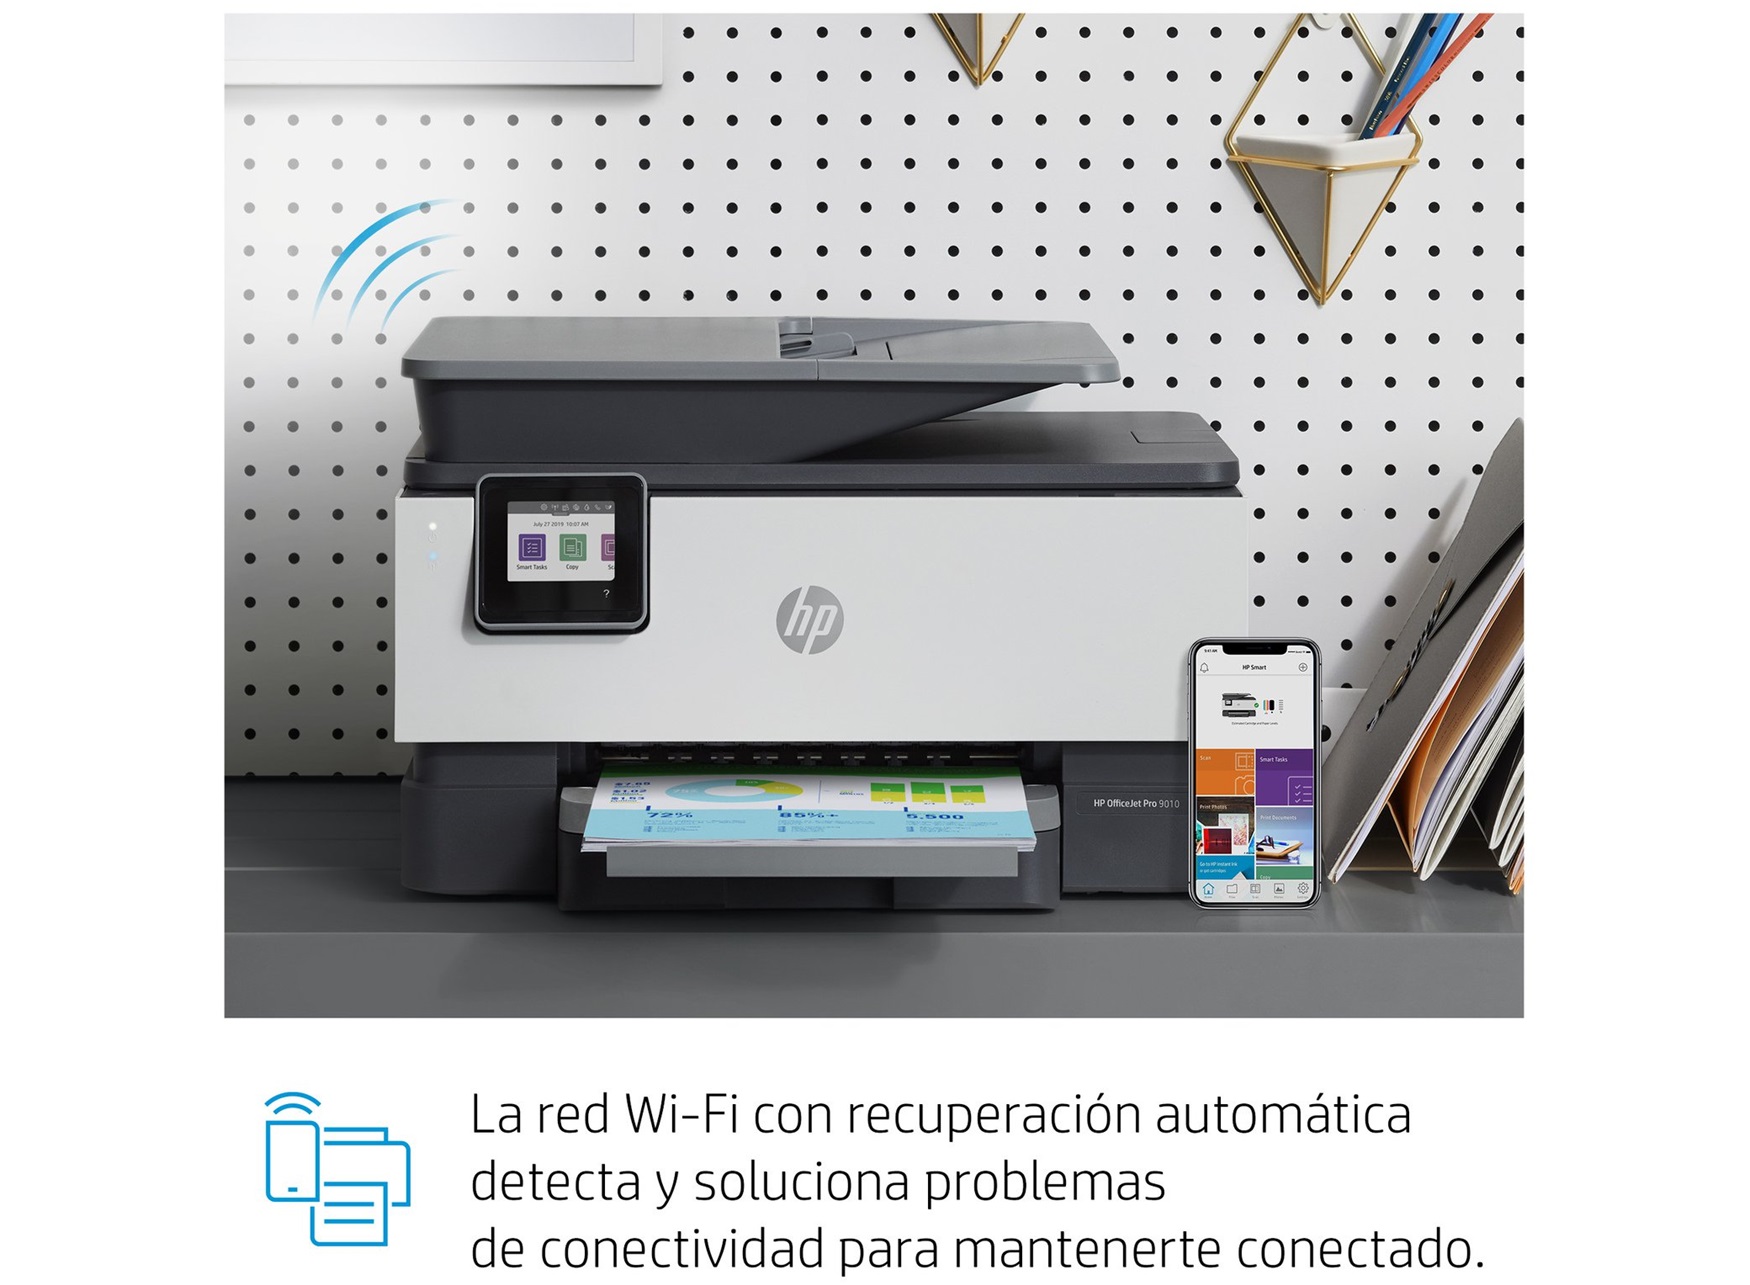 Impresora HP Multifuncion Officejet Pro 9010 imprime, copia, escanea, fax Pantalla tactil en color, duplex en ADF e impresion, 22 ppm negro y 18 ppm en color Usb-Wifi-Ethernet, ecotank tinta pigmentada sin chip